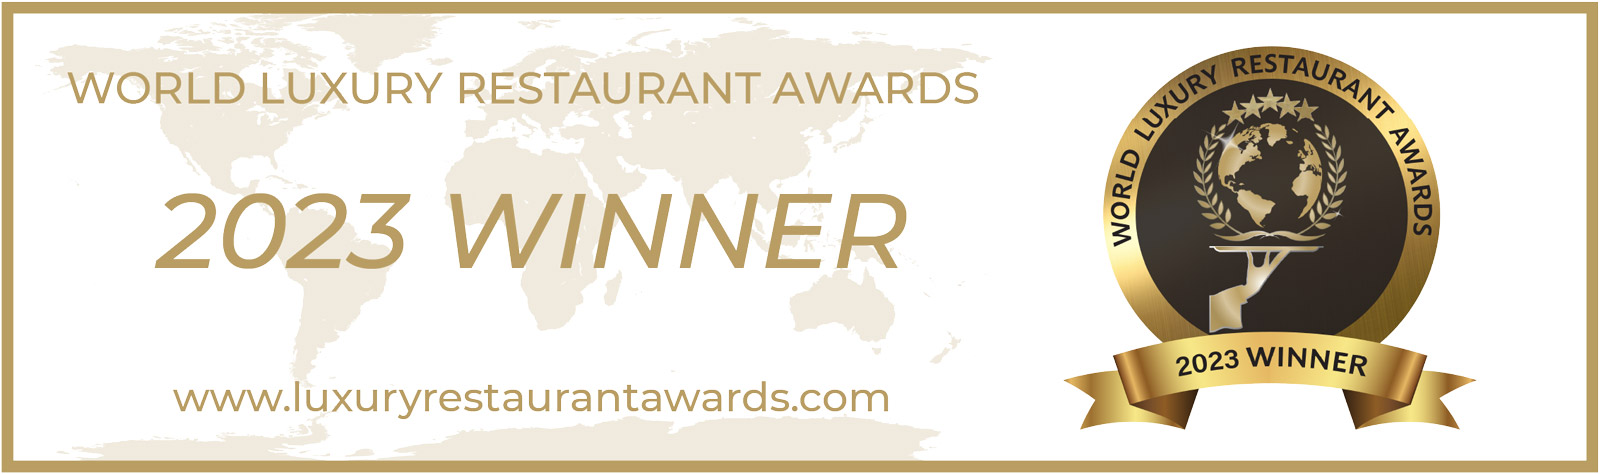 World Luxury Restaurant Awards 2023